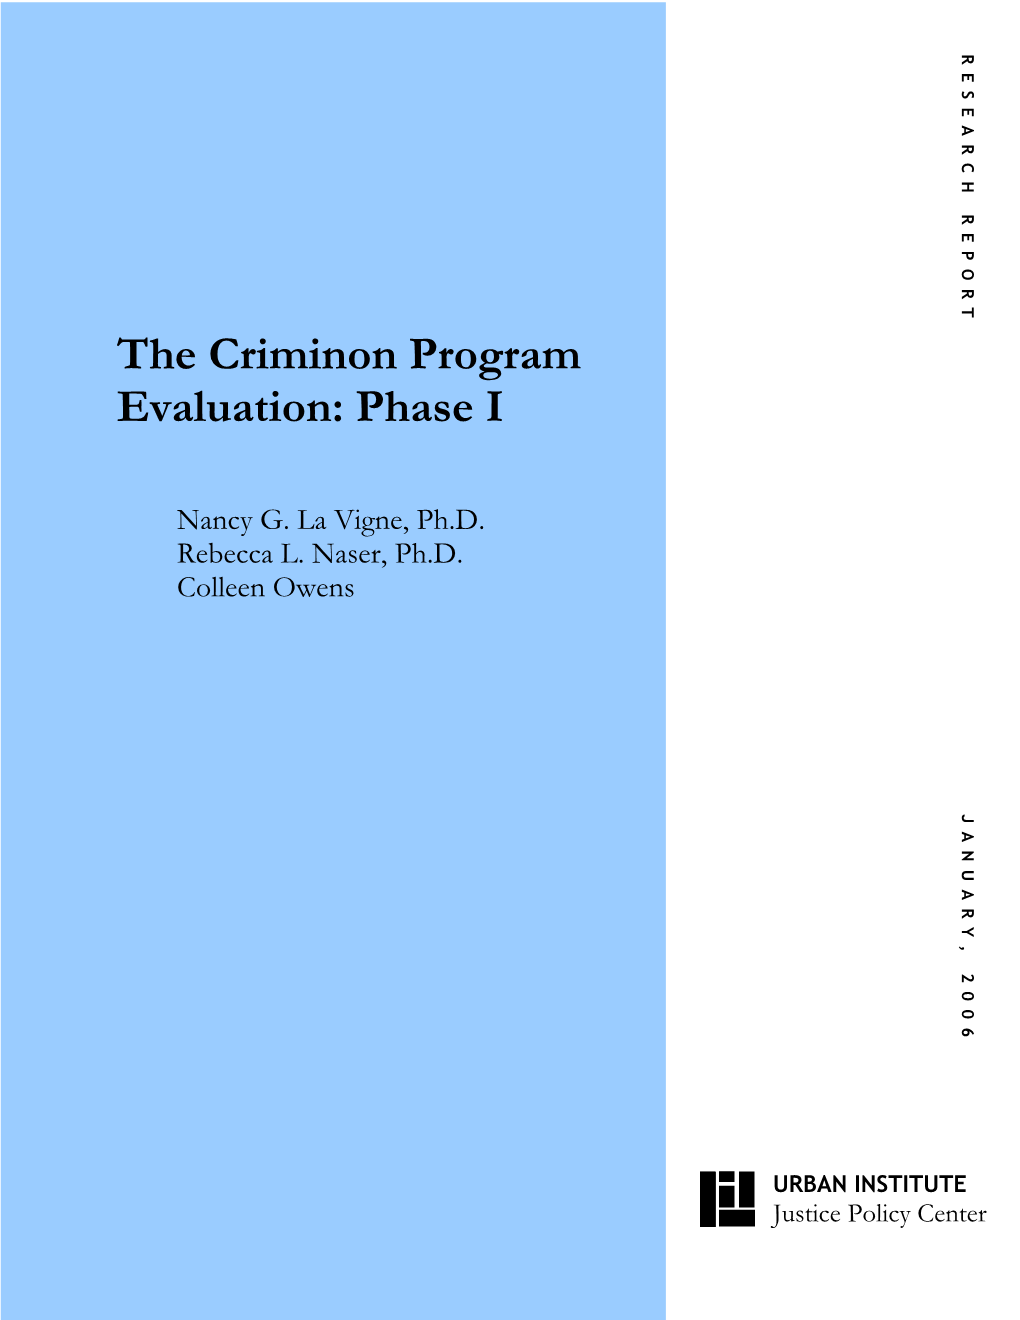 The Criminon Program Evaluation: Phase I